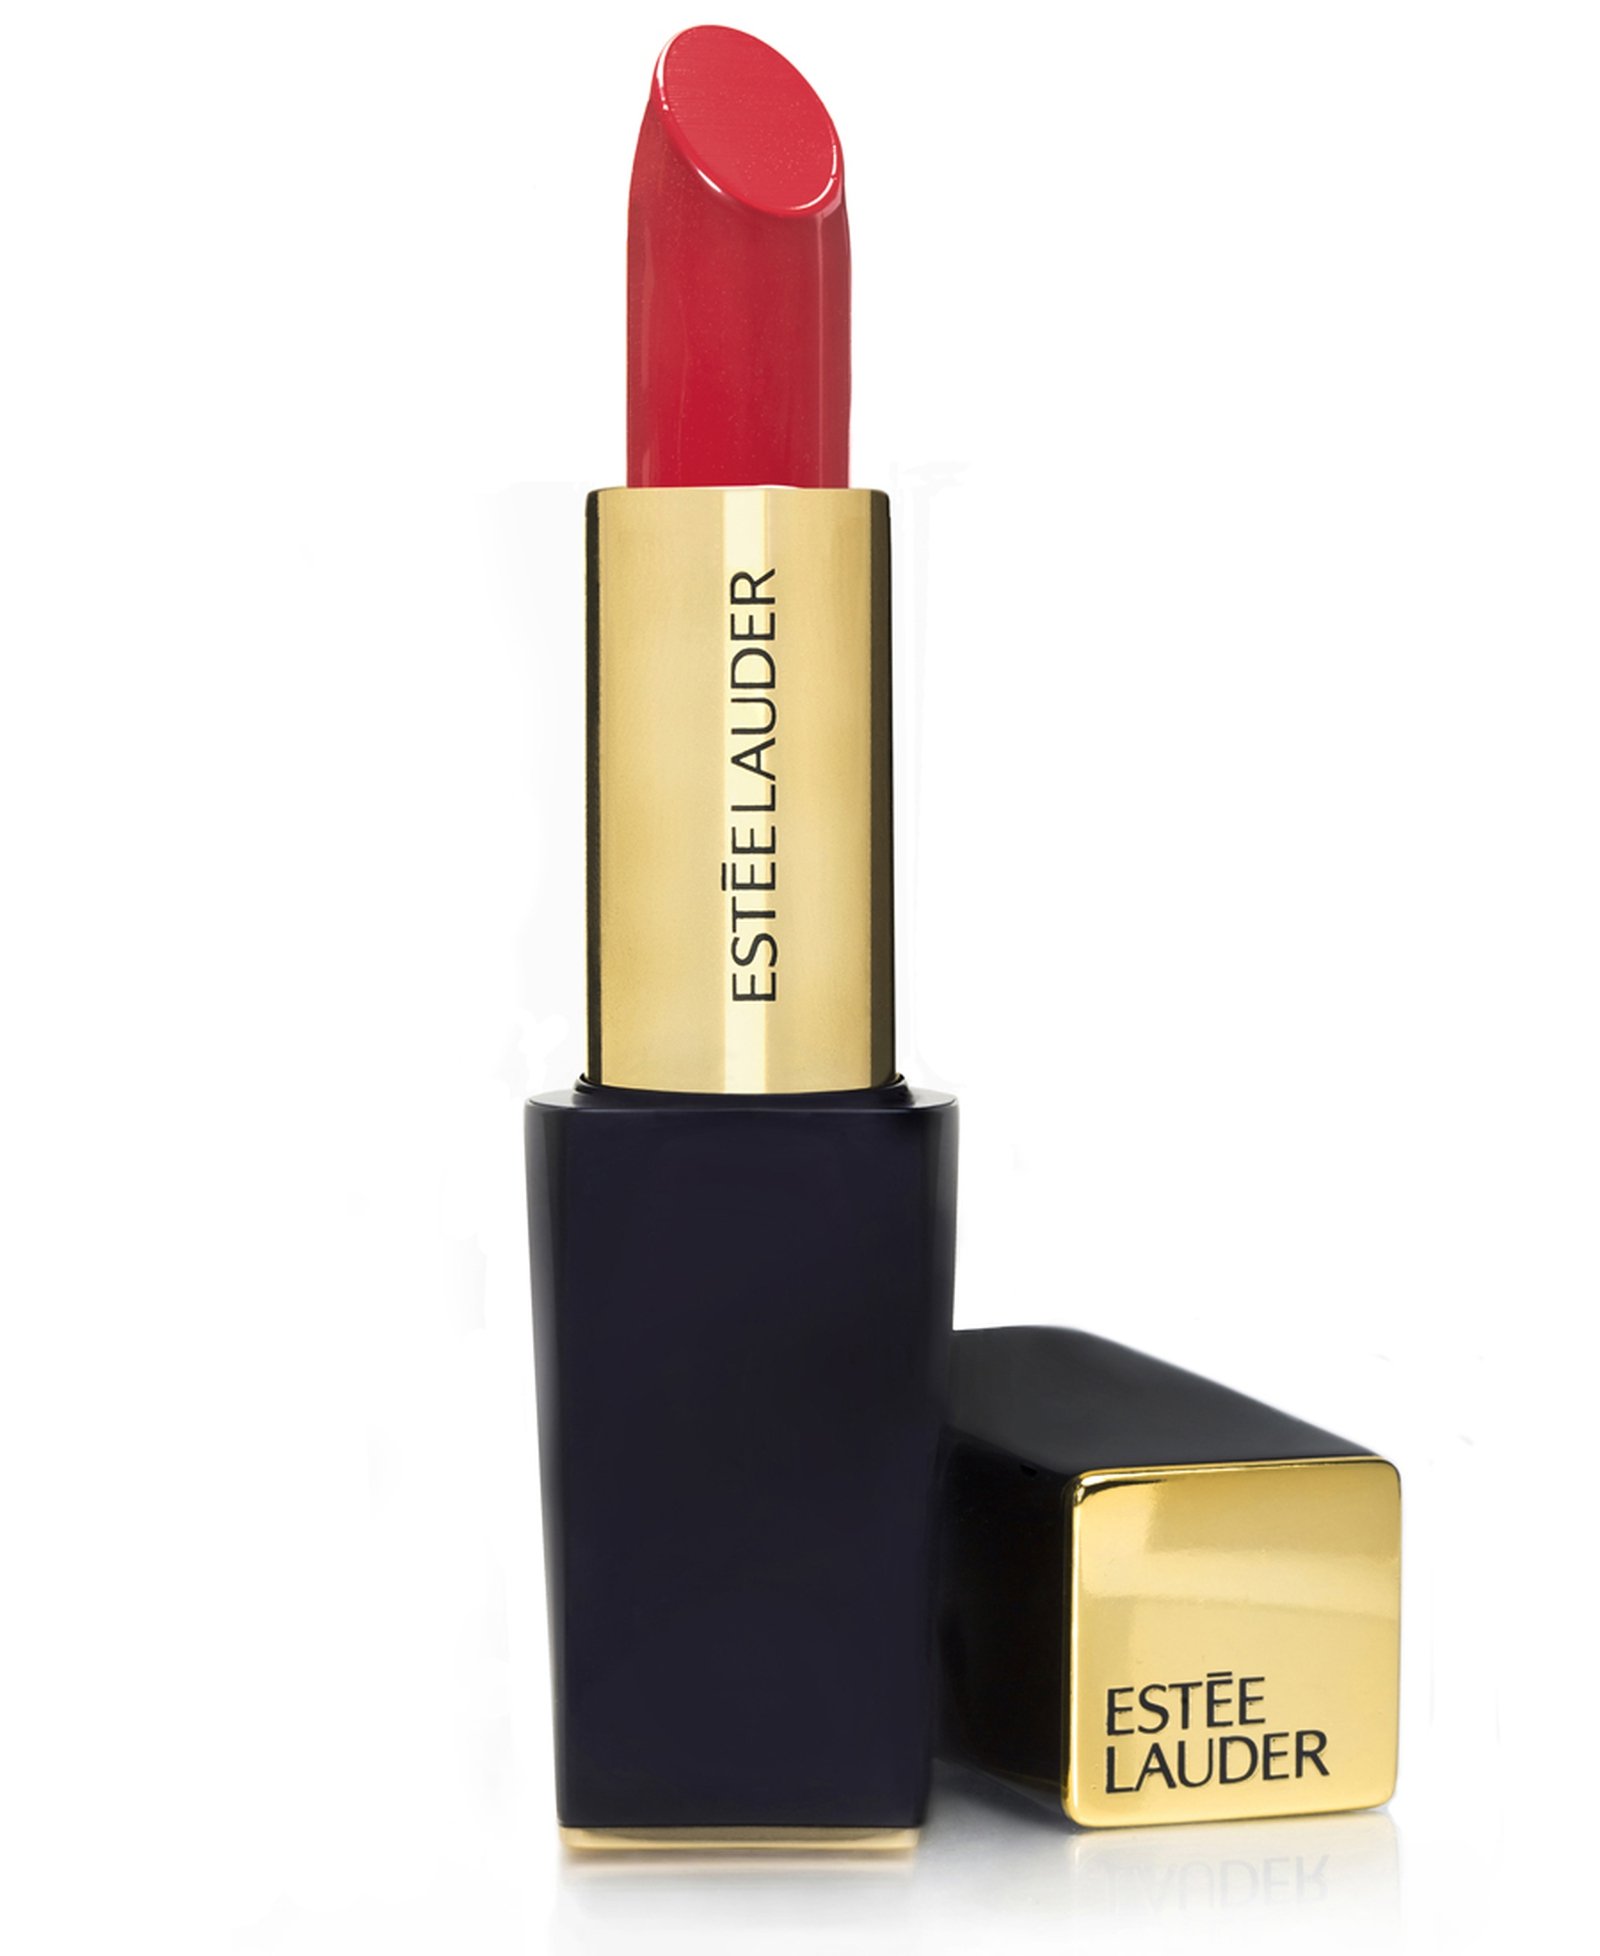 Estee Lauder's New Lipstick Launch